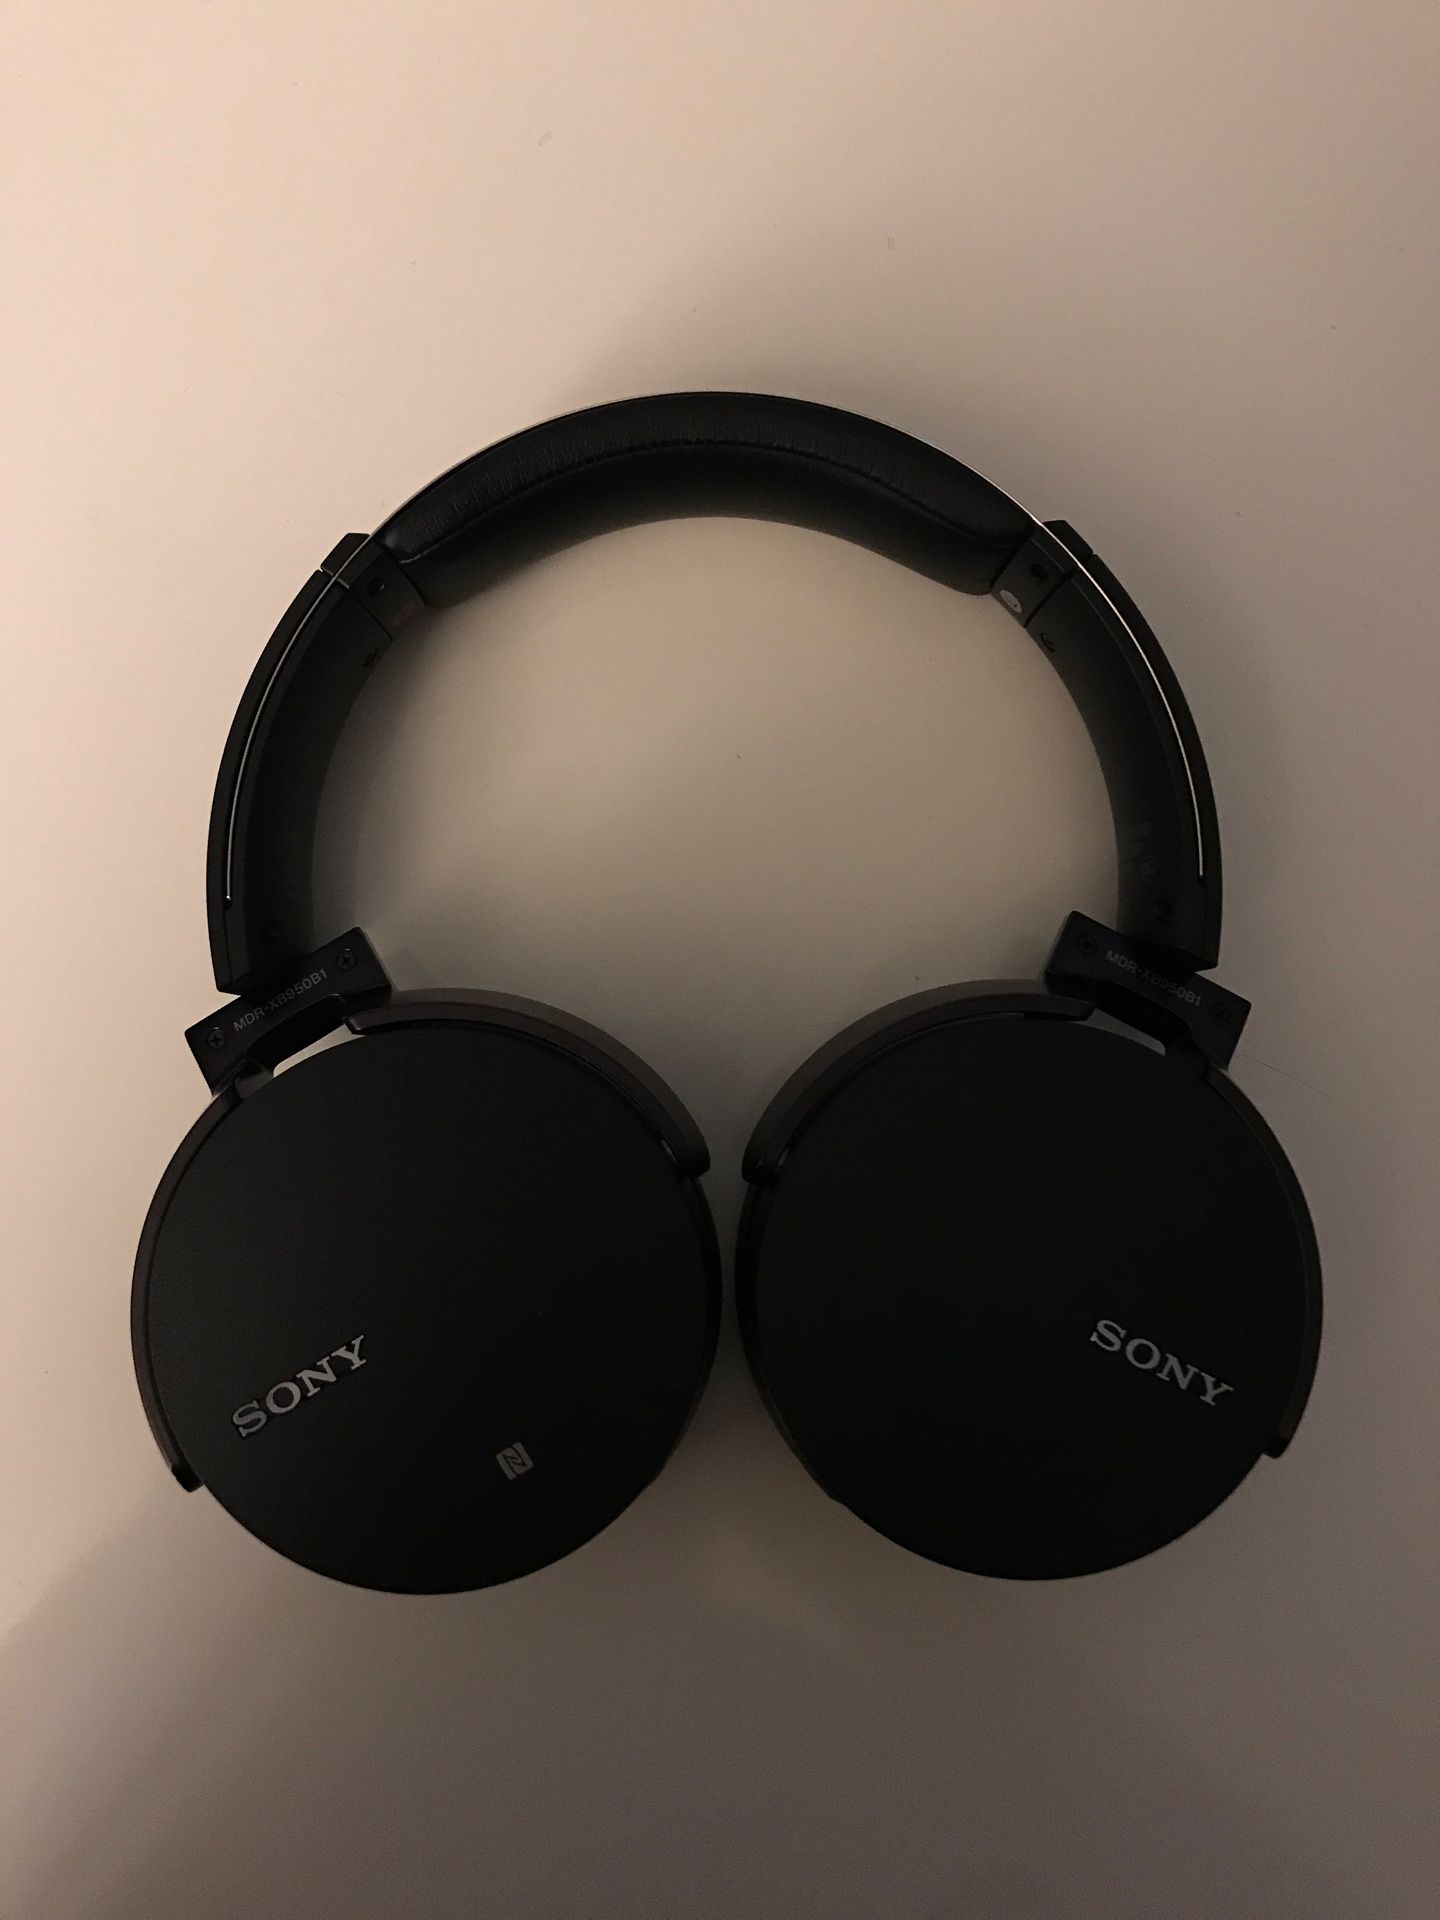 Sony Bluetooth Wireless Over Ear Headphones